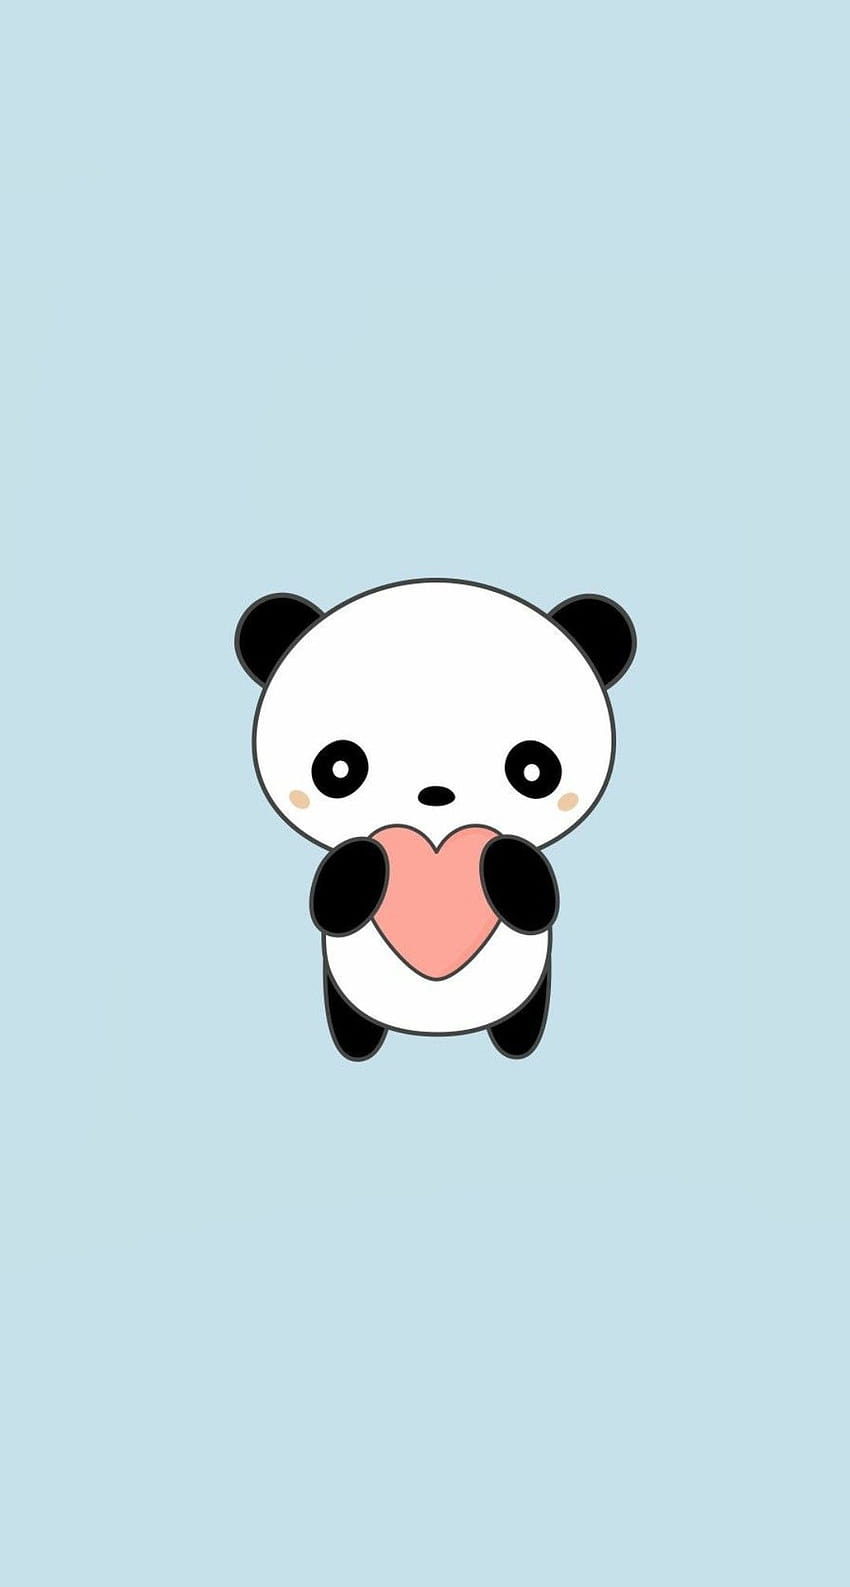 A panda holding a heart on a blue background - Panda